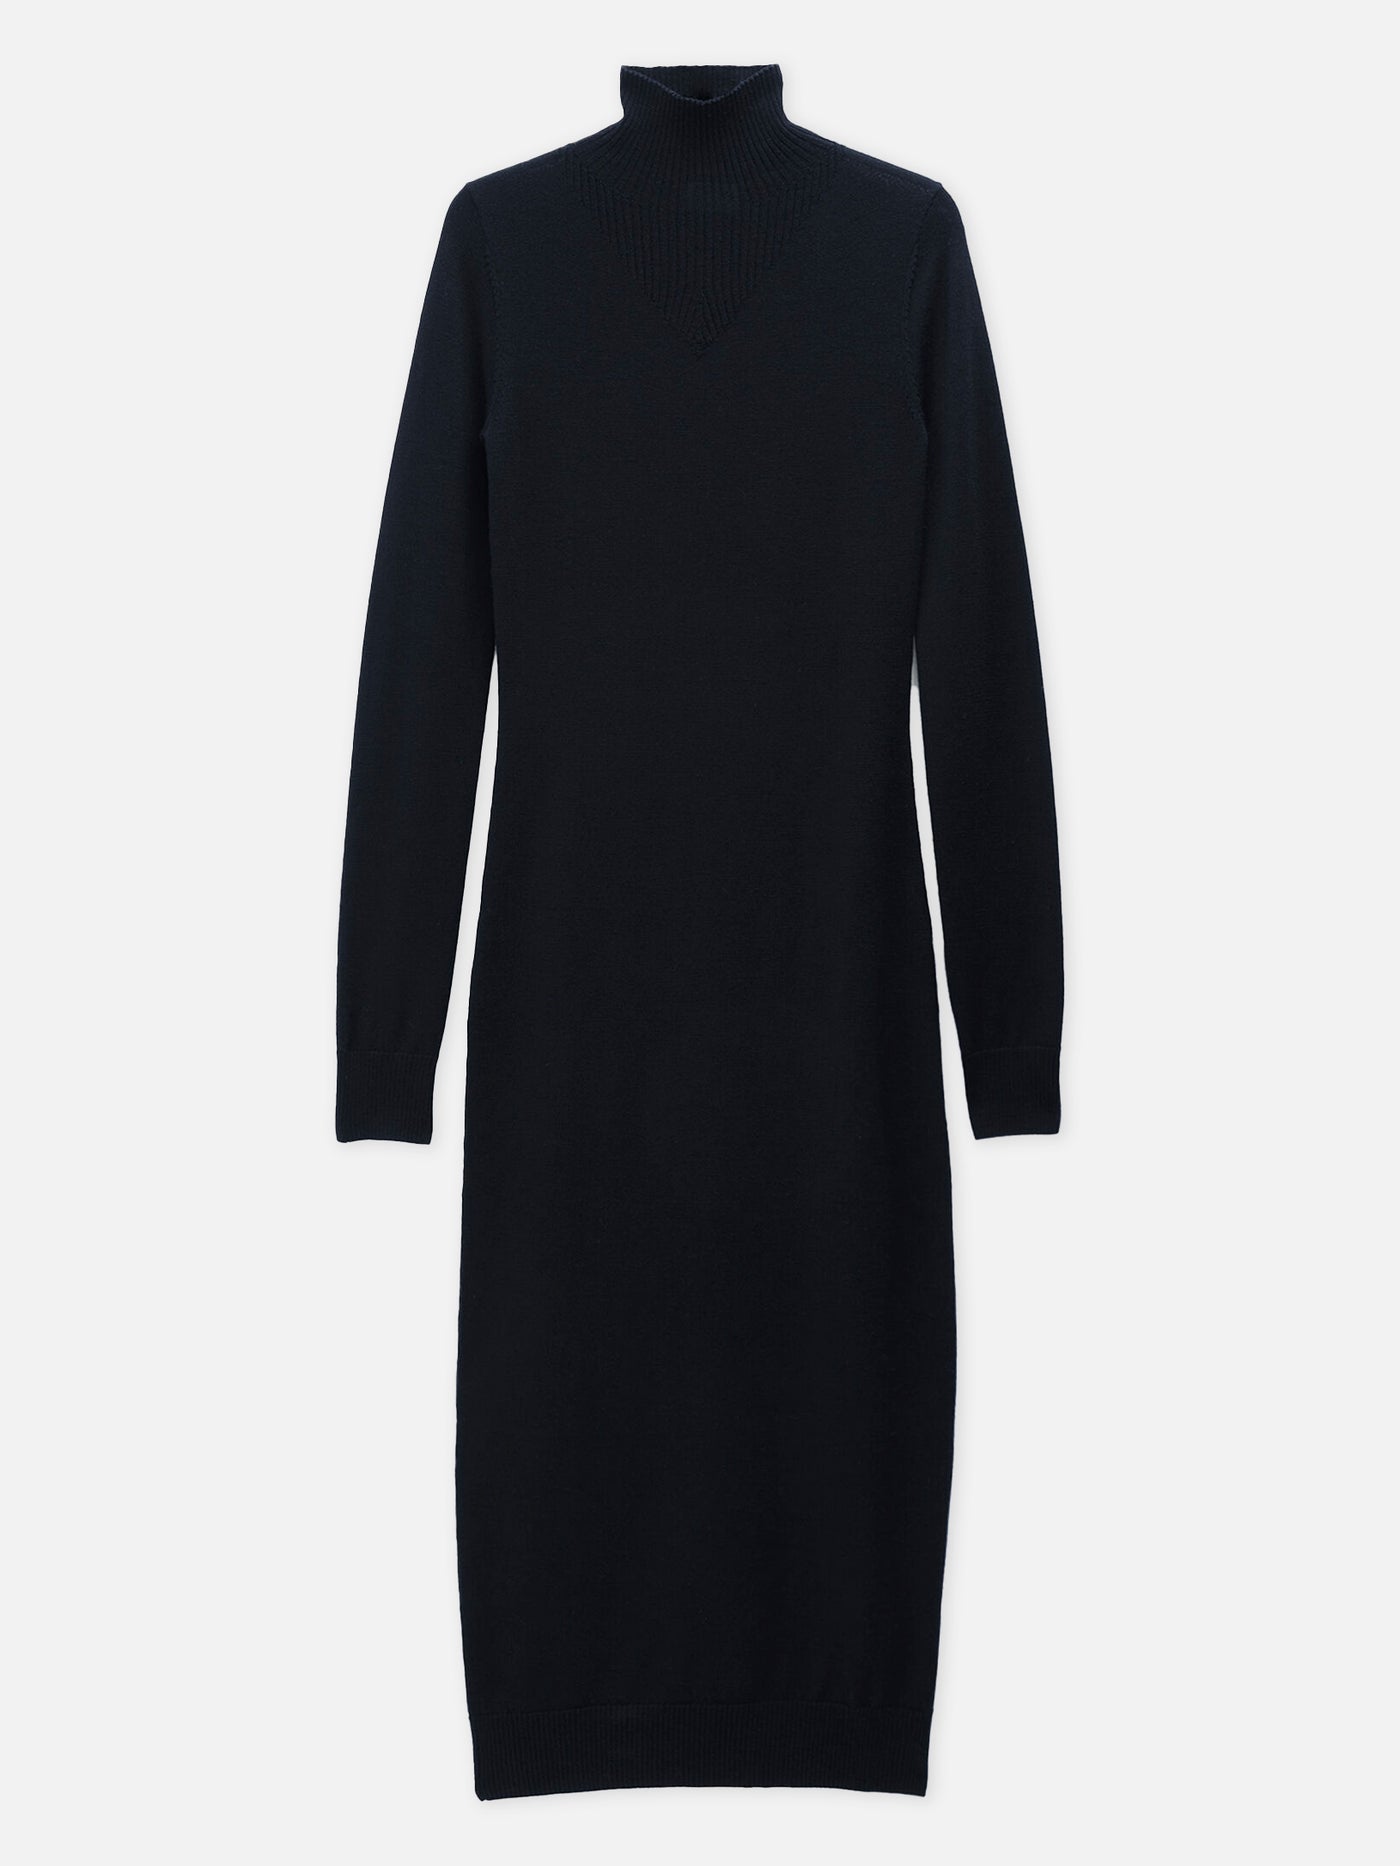 Knit Turtleneck dress, black